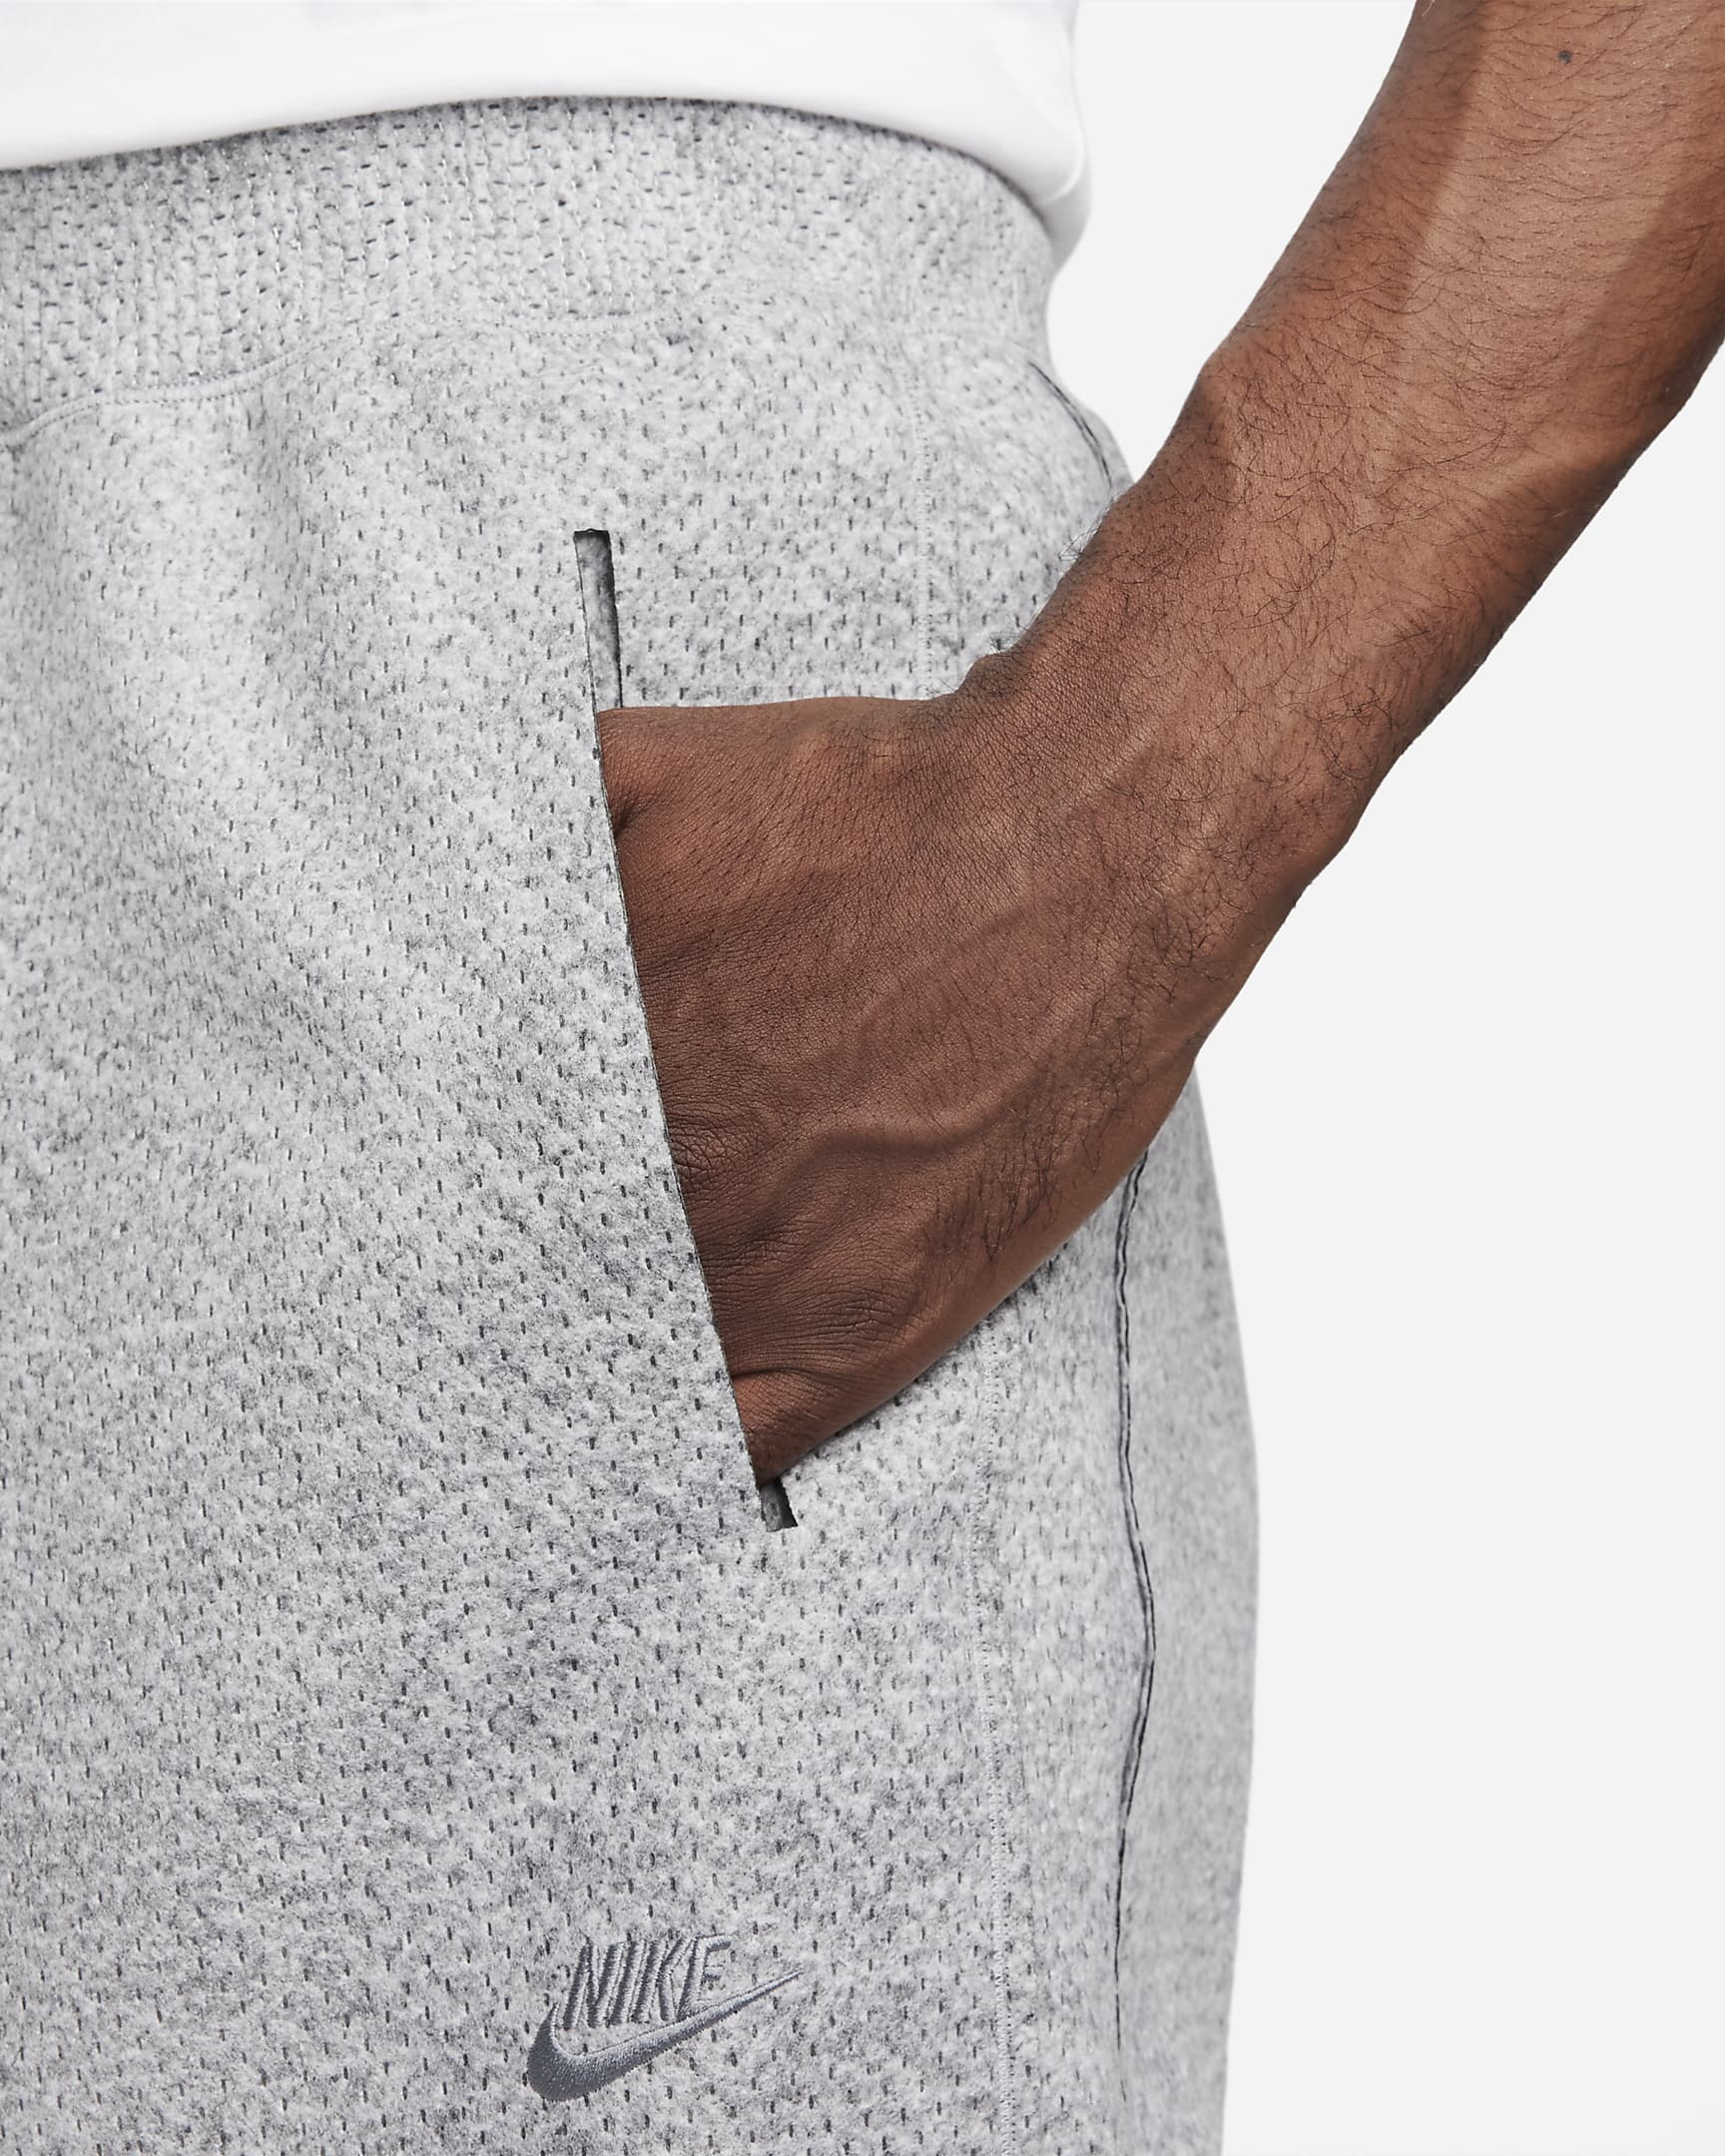 Pantalon ADV Therma-FIT Nike Forward pour homme - Smoke Grey/Smoke Grey/Light Smoke Grey/Cool Grey